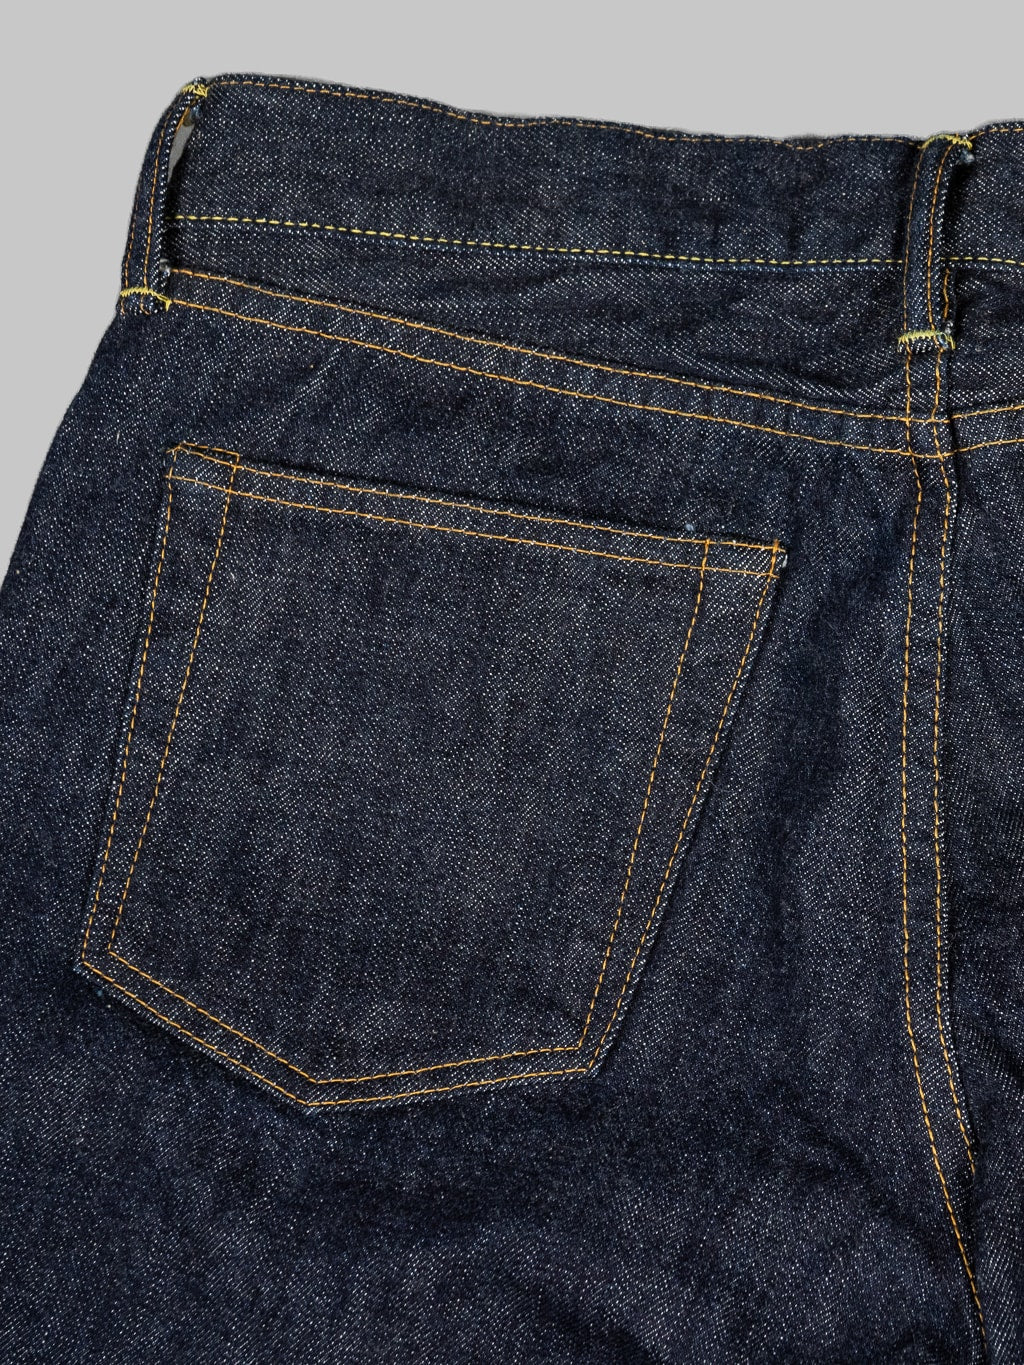 tcb jeans slim 50s selvedge japanese denim back pocket closeup